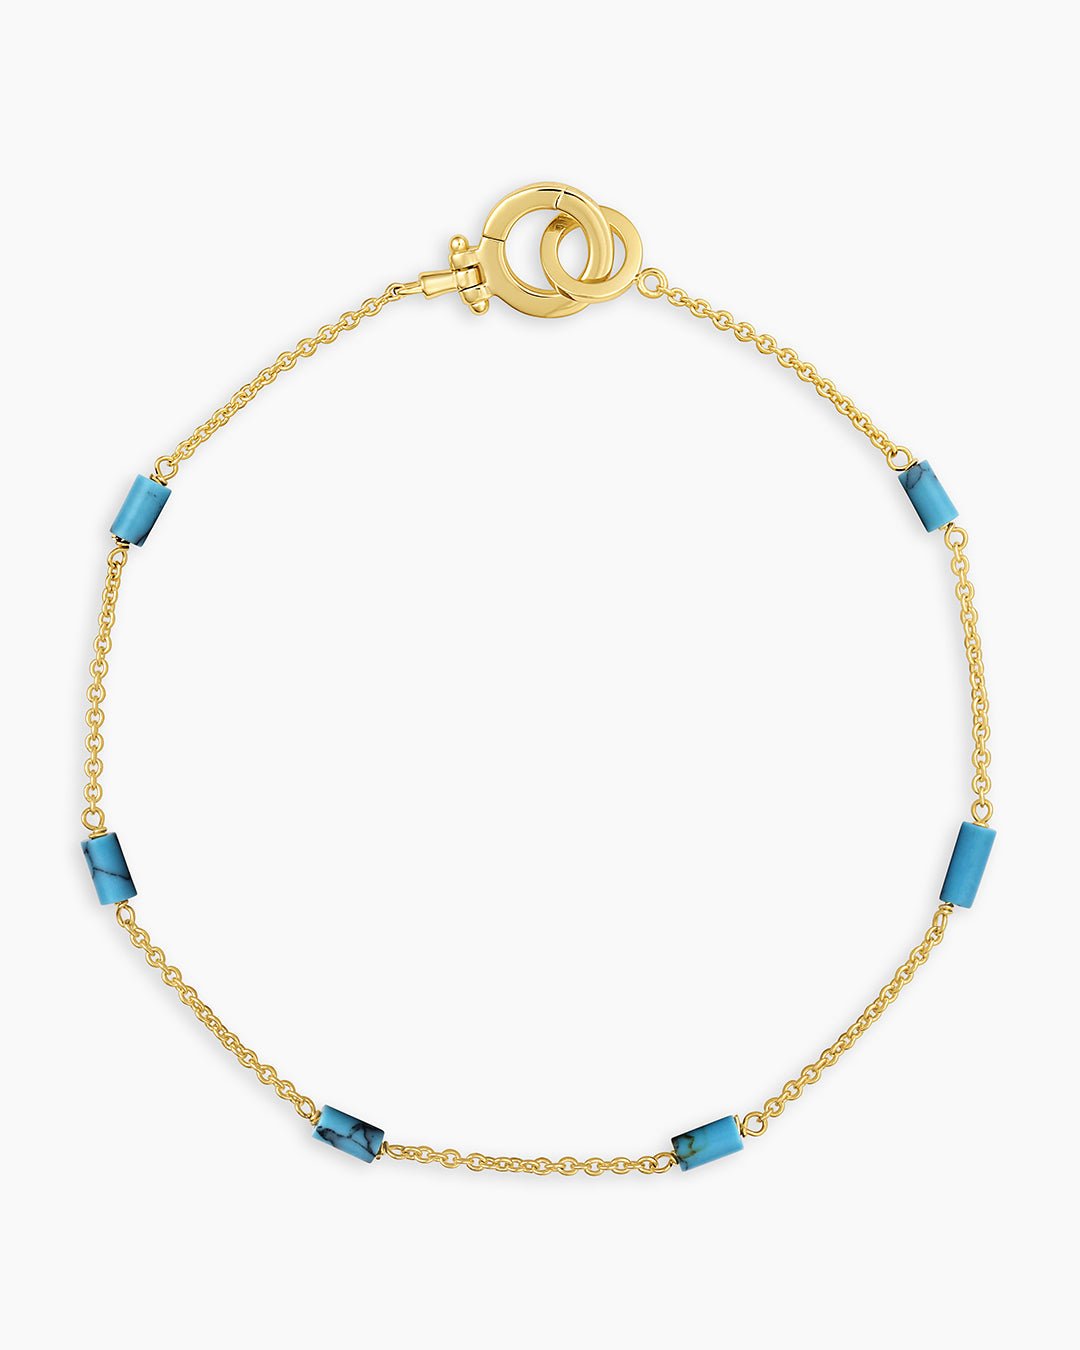 Tatum Bead Bracelet (Turquoise ) || option::Gold Plated, Turquoise